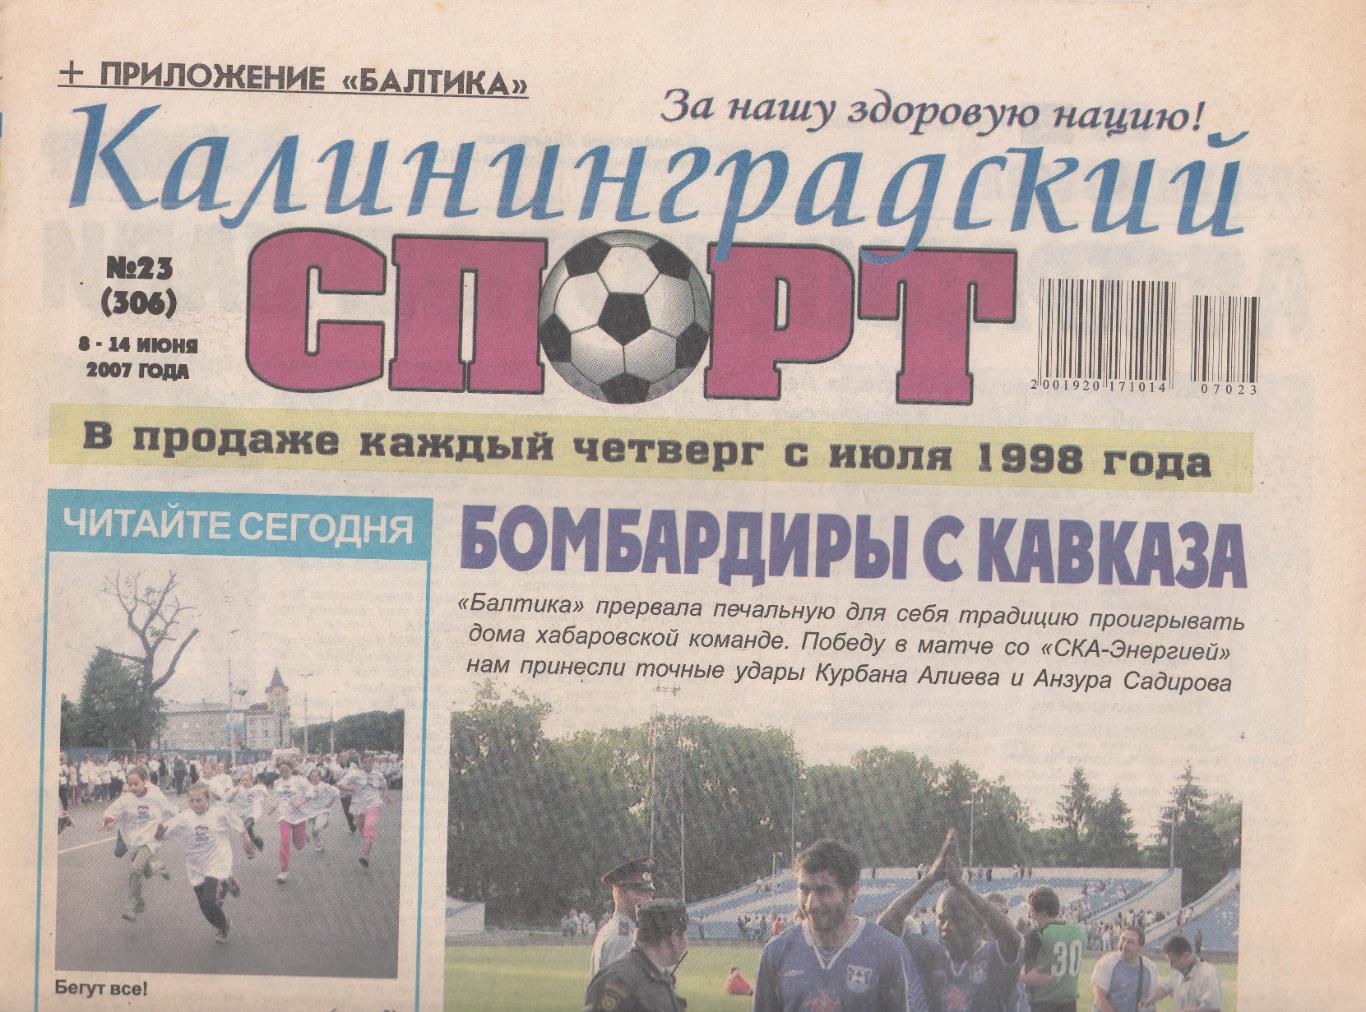 Калининградский спорт № 23 2007 3 обзора матчей Балтики + Балтики-2 (см.ниже)